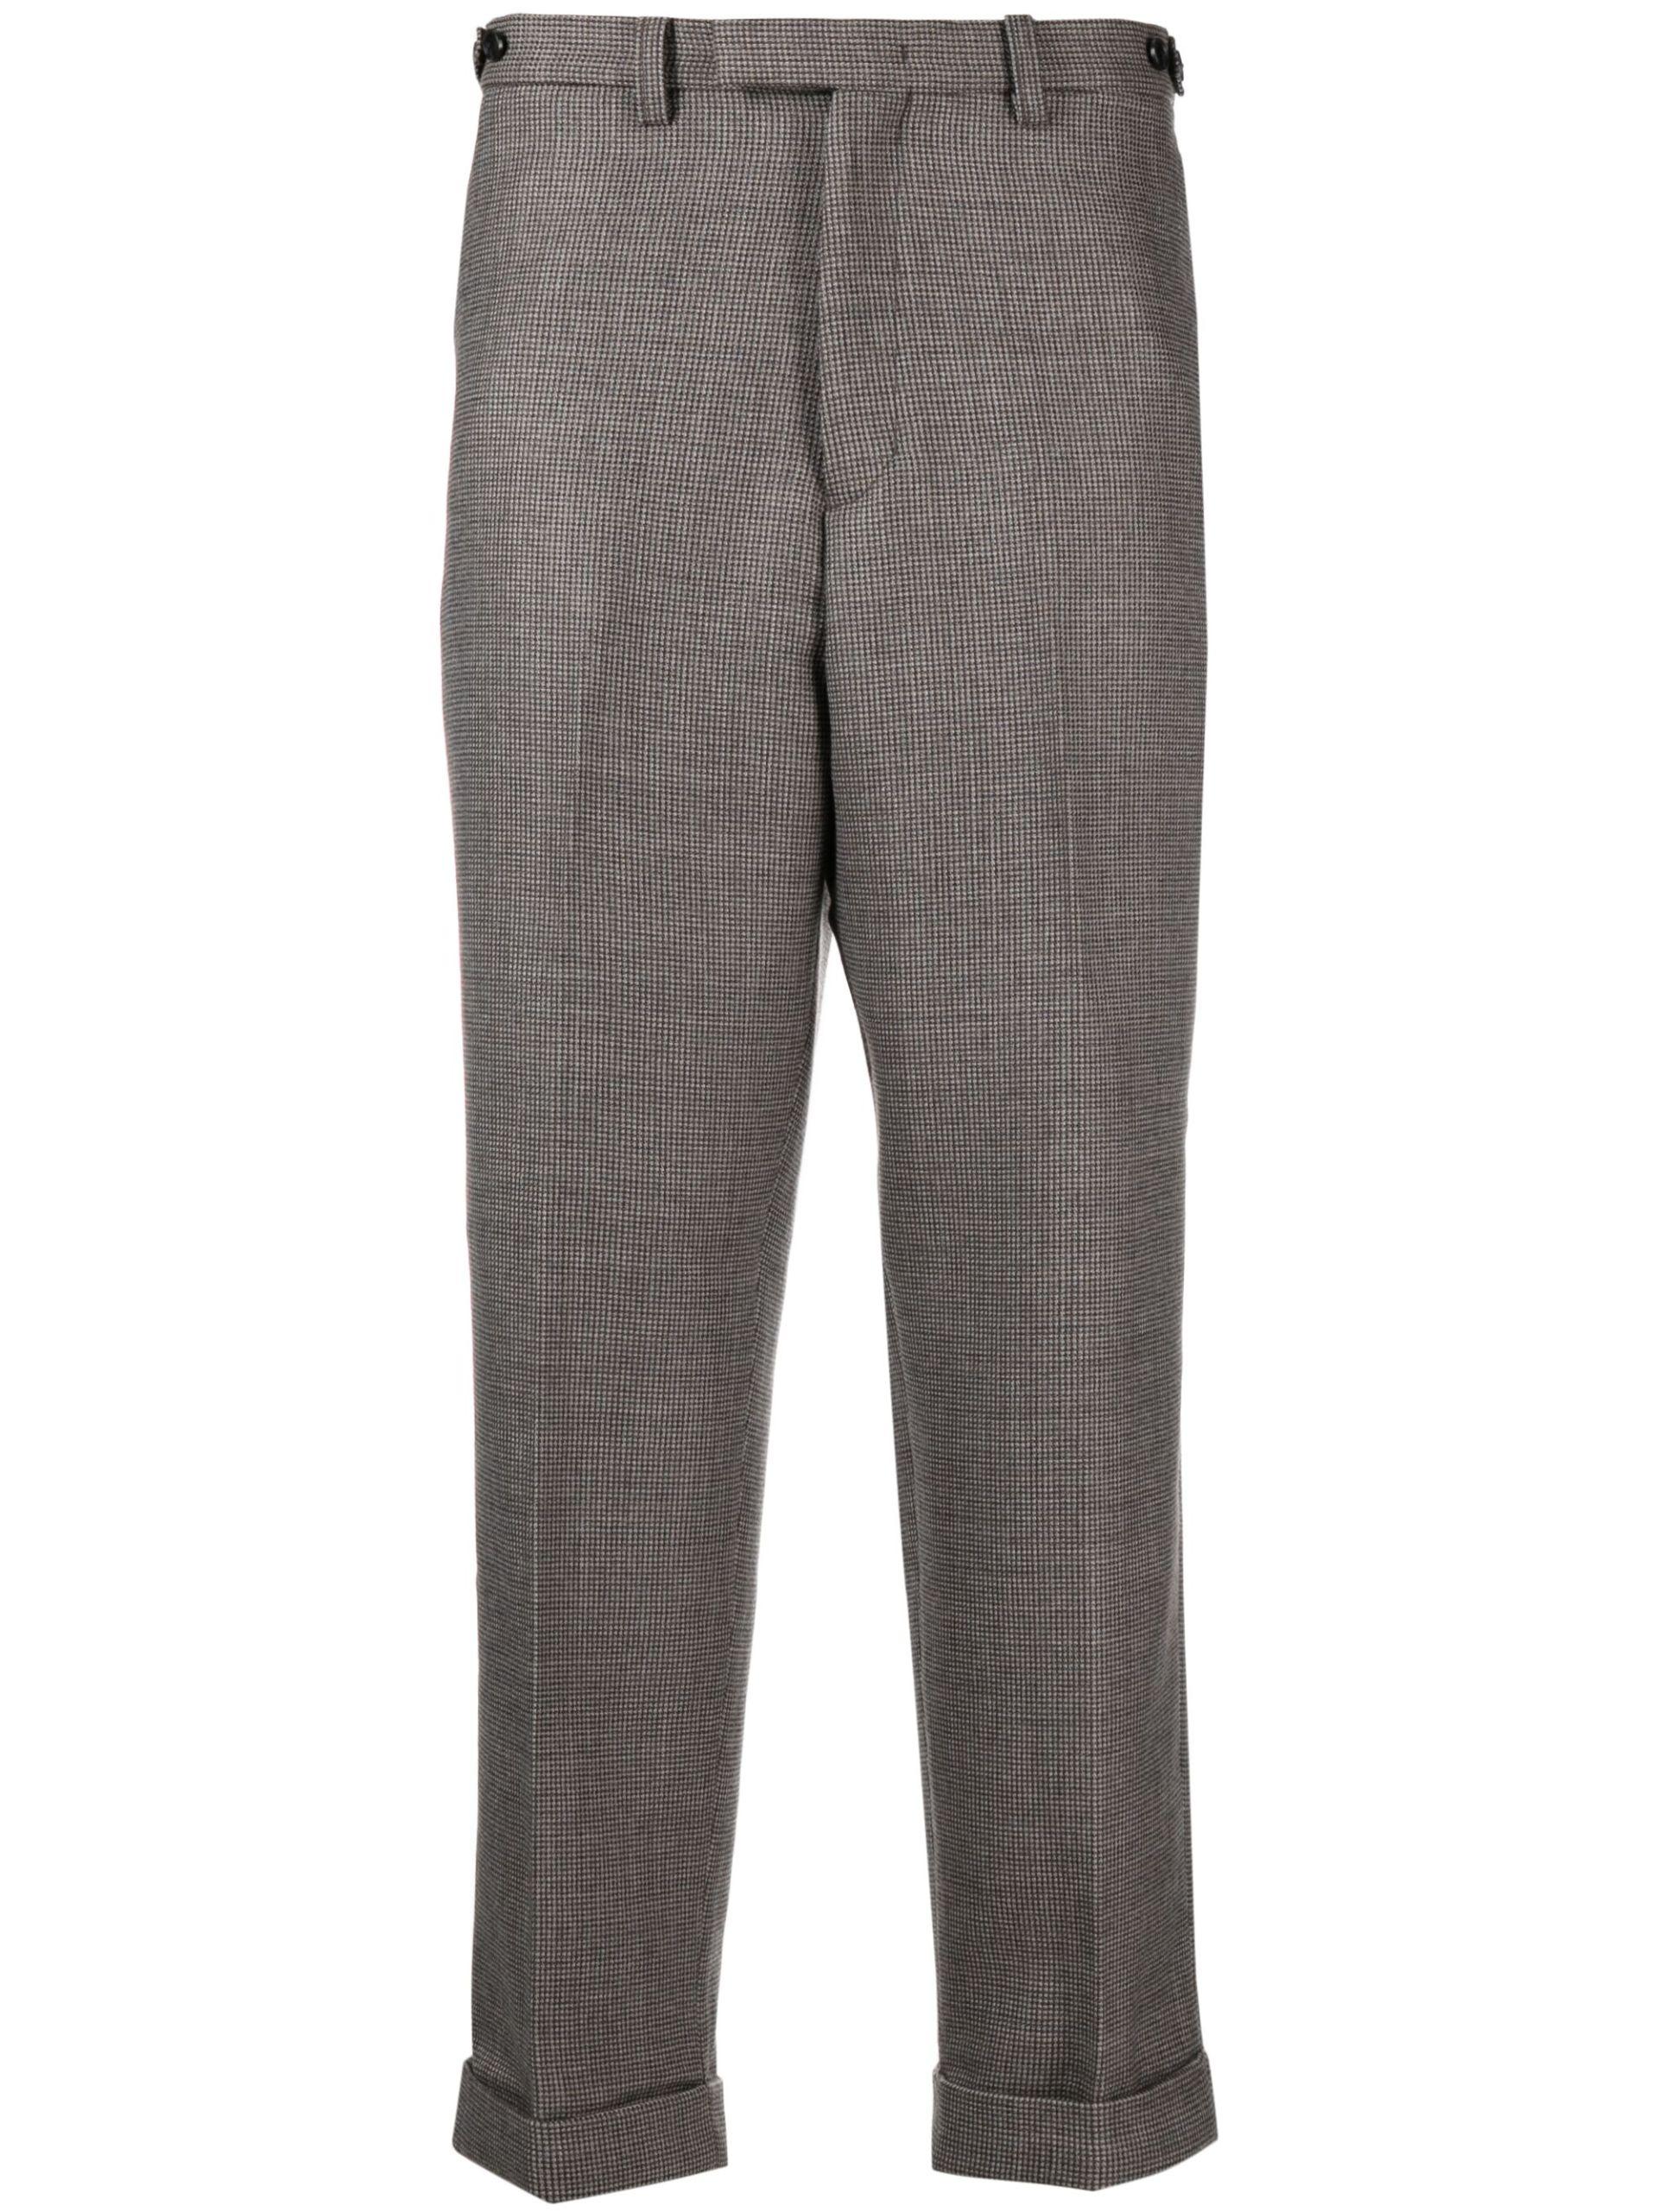 Beams Plus Herringbone Wool Tailored Trousers - Men's - Wool/cotton in Grey  for Men